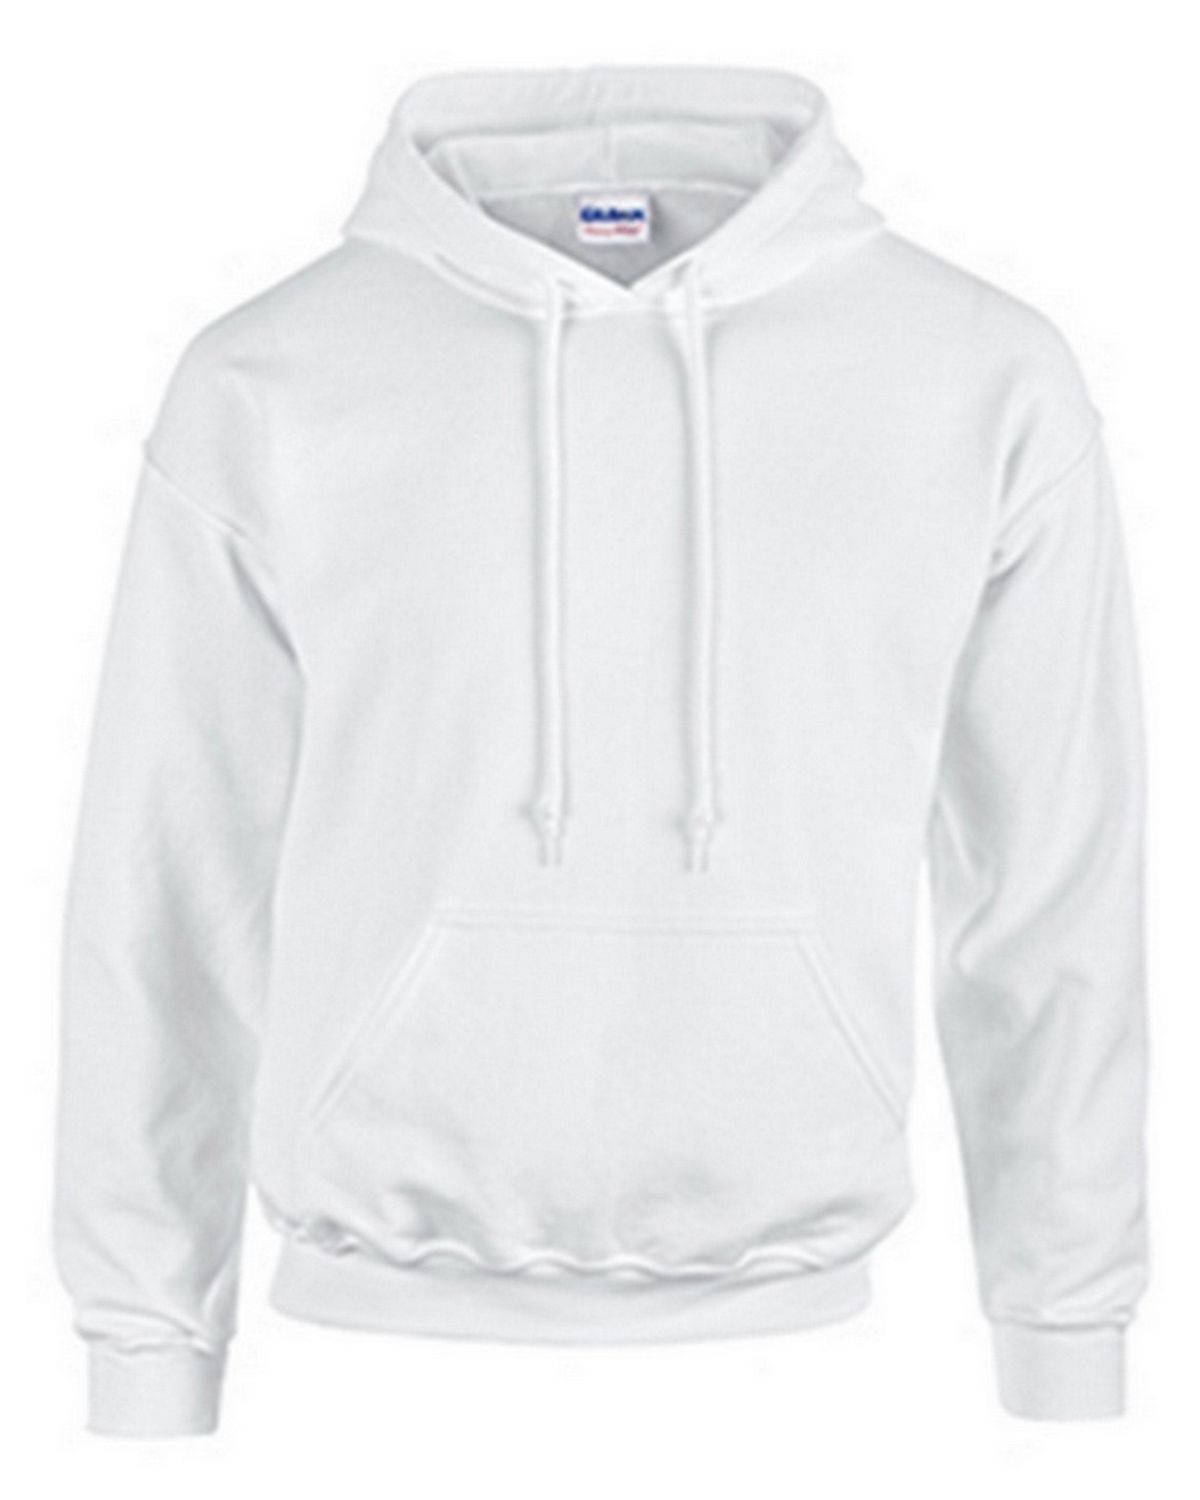 Buy Gildan G18500 Heavy Blend Adult Hooded Sweatshirt